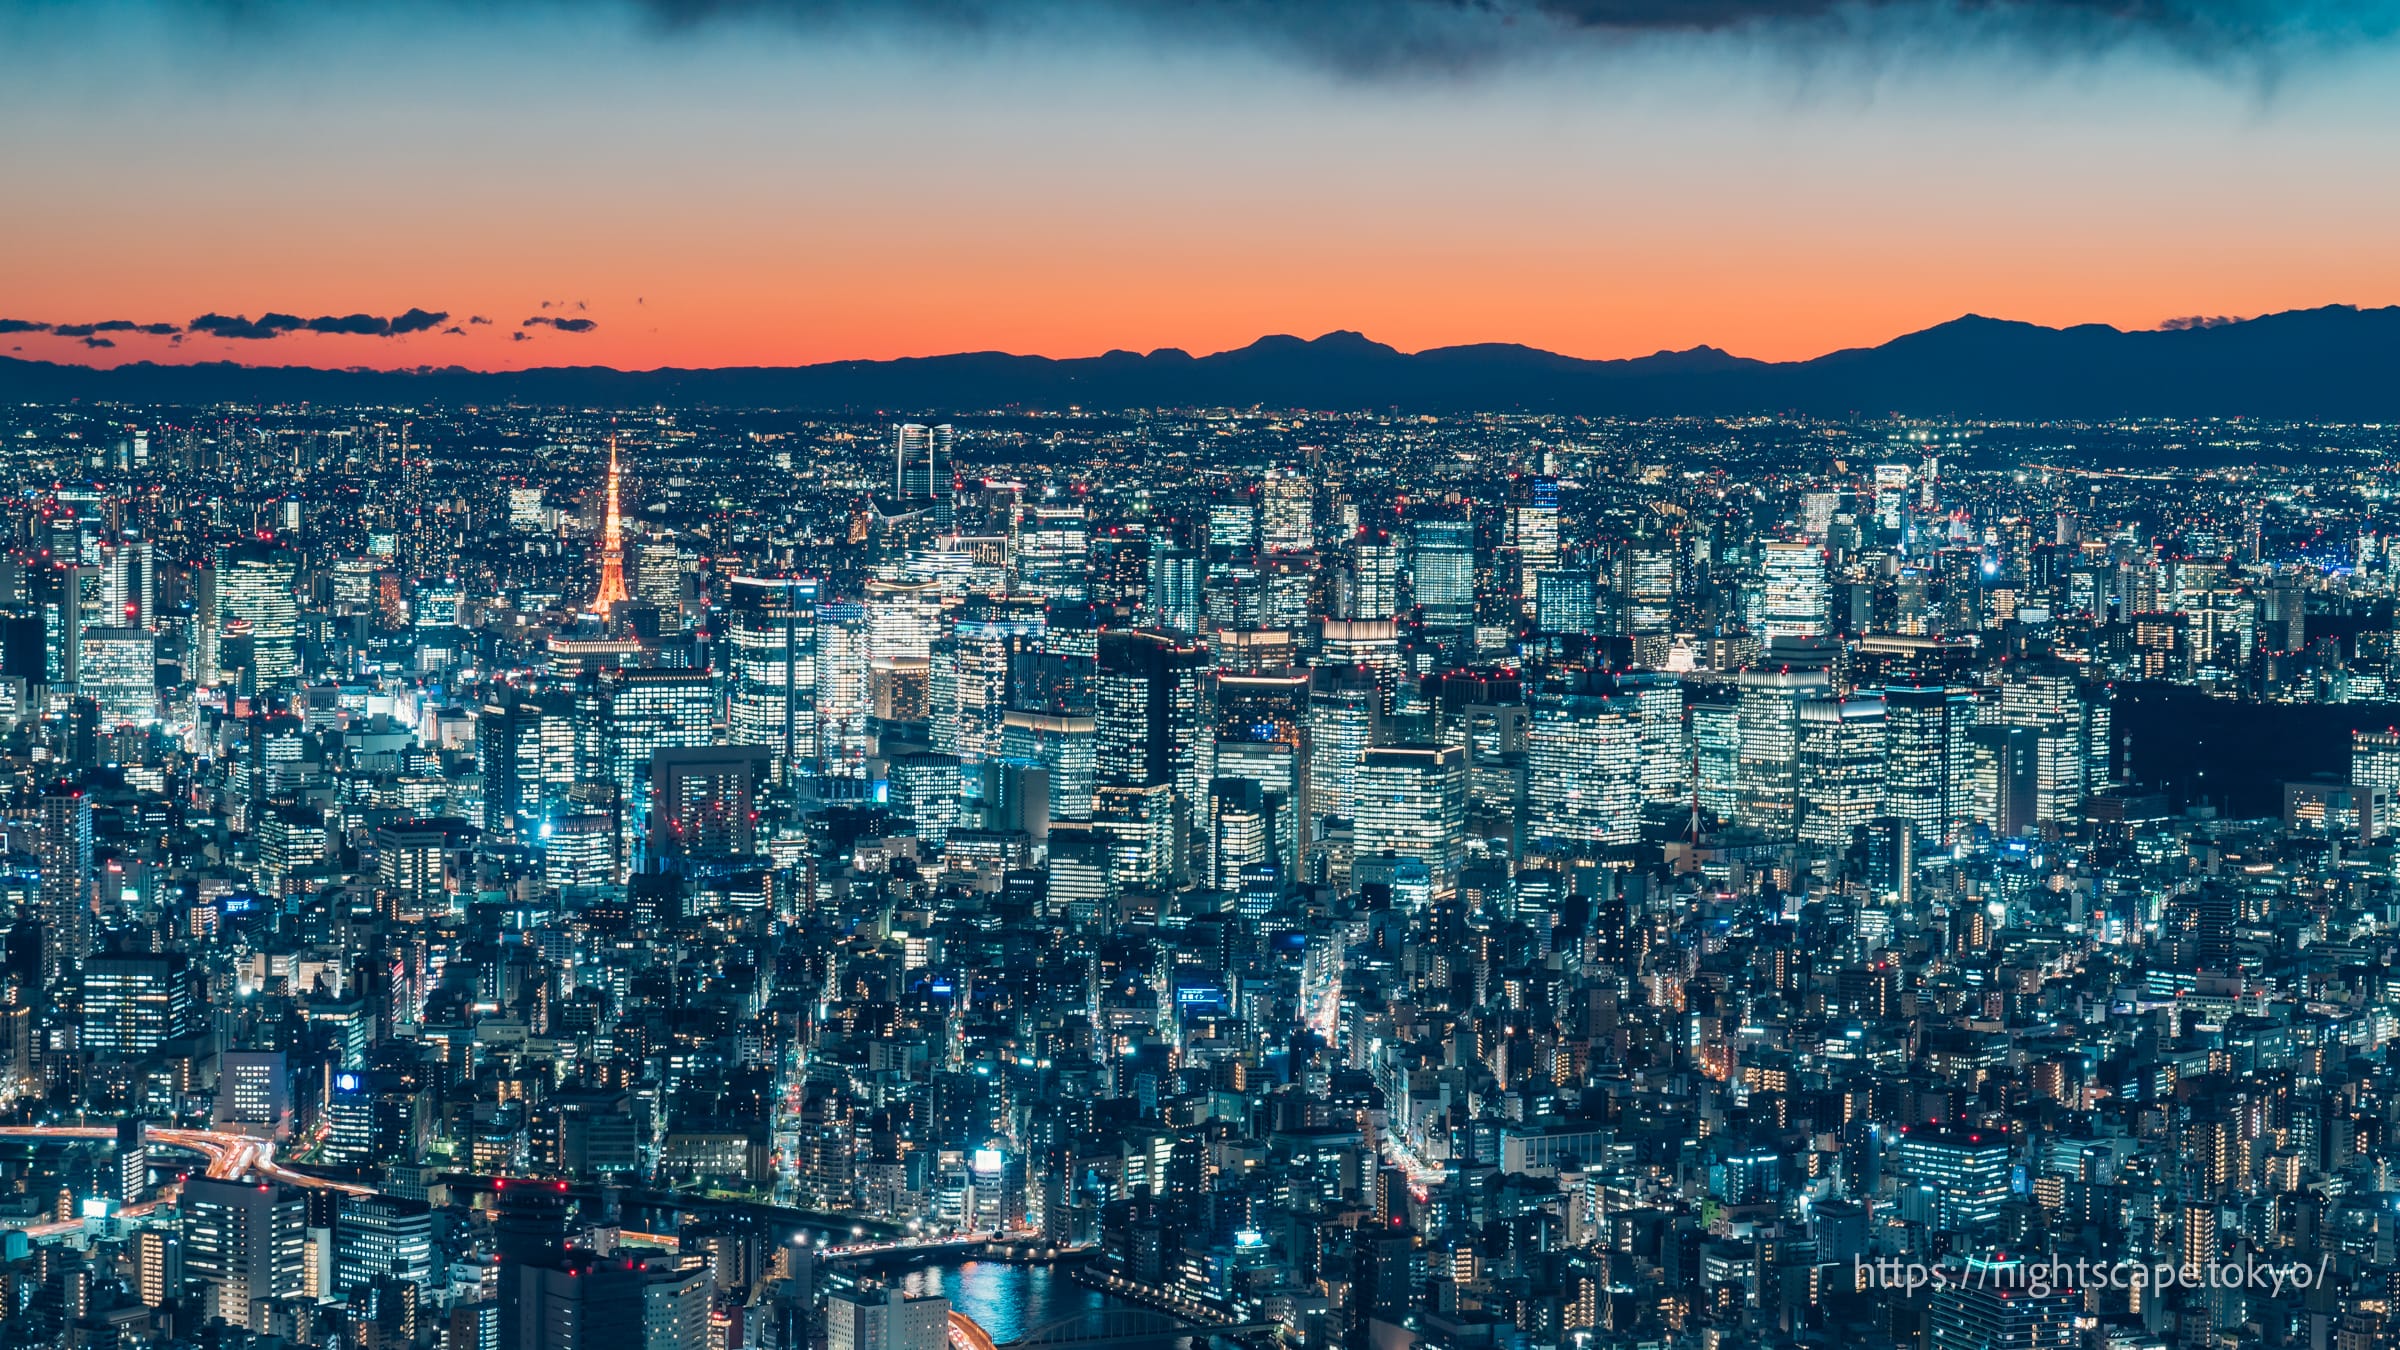 Night view of Tokyo buildings from Tokyo Sky Tree